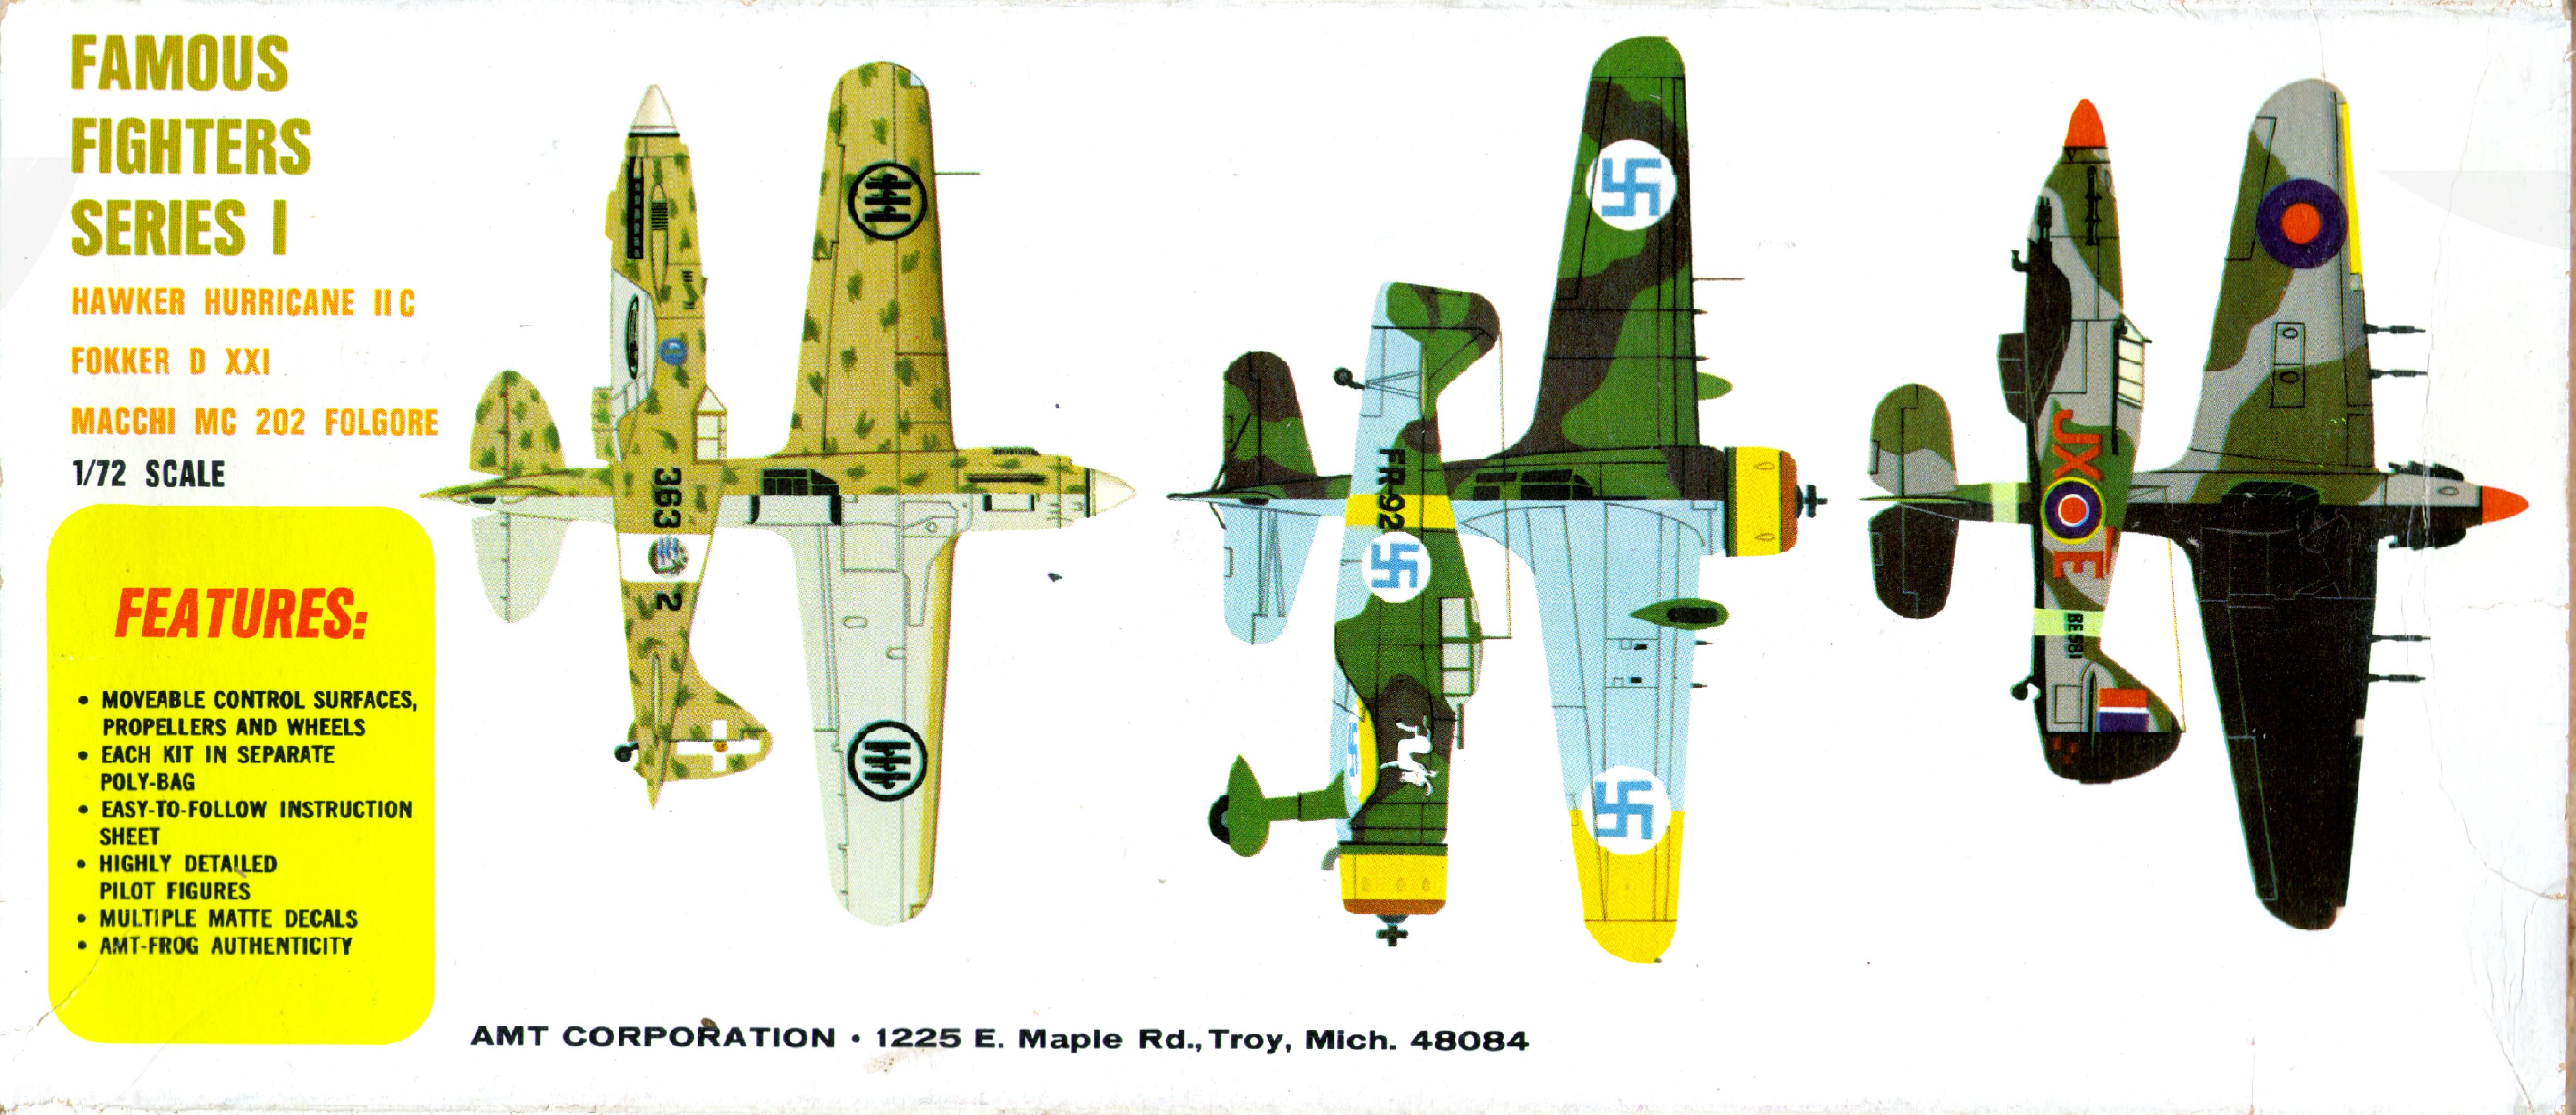 Схемы окраски и маркировки amt 3955-130 Fokker D21, Famous Fighters Series I, American Metal Toys, 1969,1